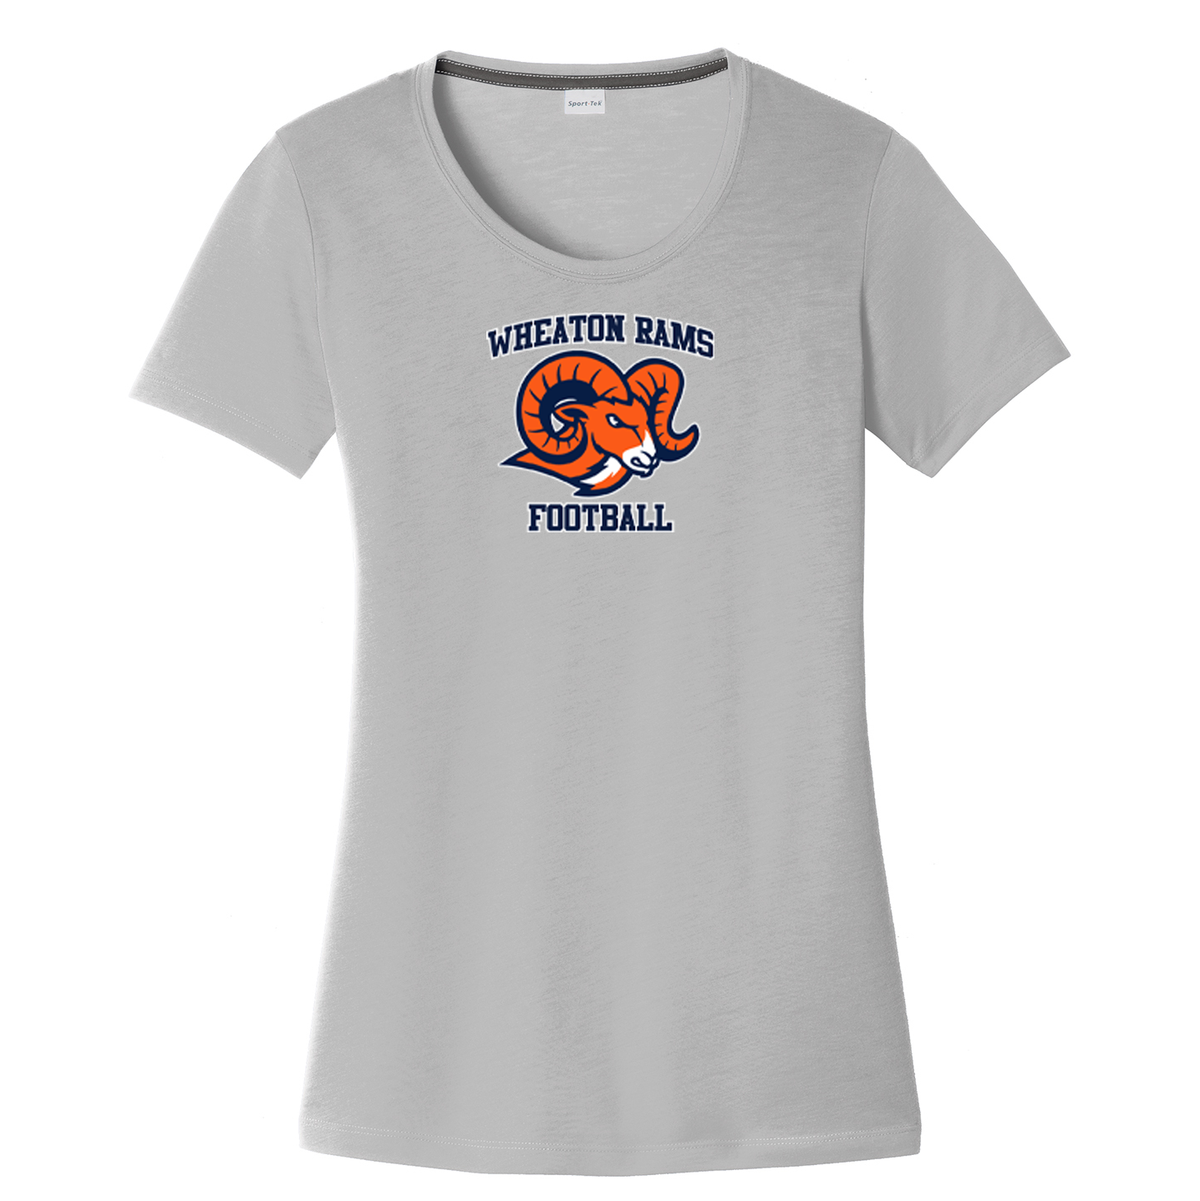 Wheaton Rams Football Women's CottonTouch Performance T-Shirt